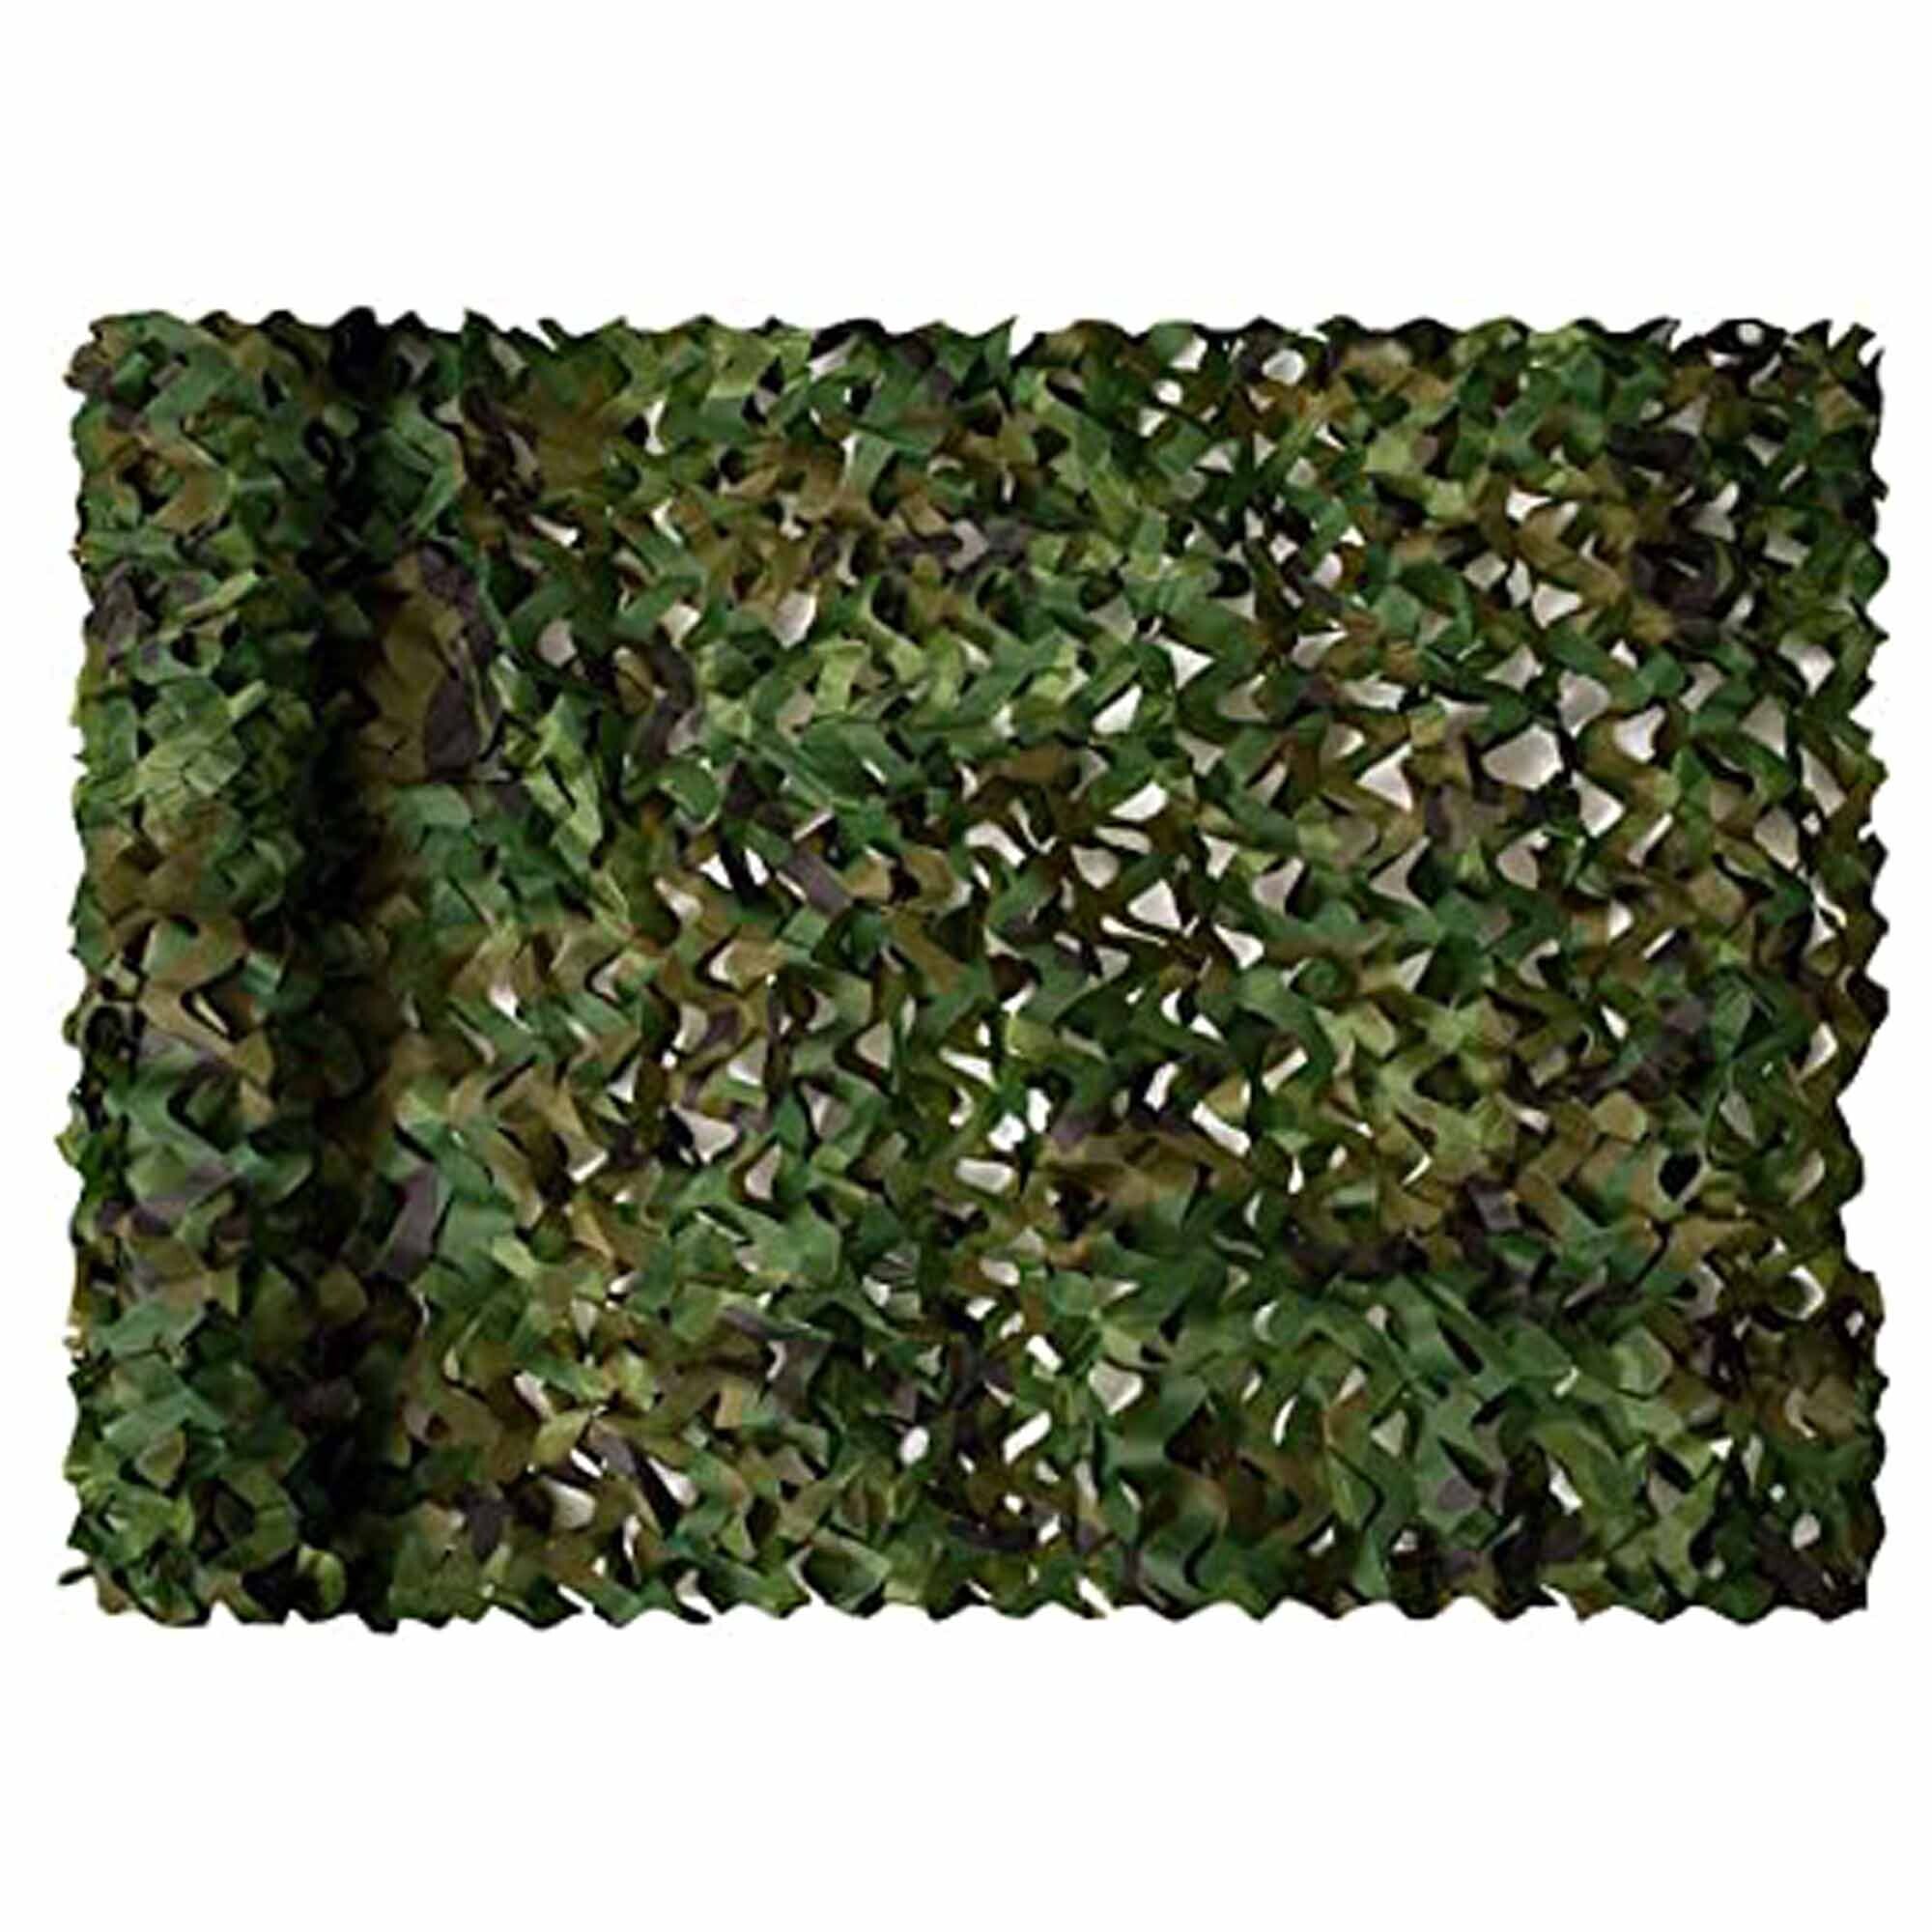 Red de camuflaje verde - 3x3 m — HBD